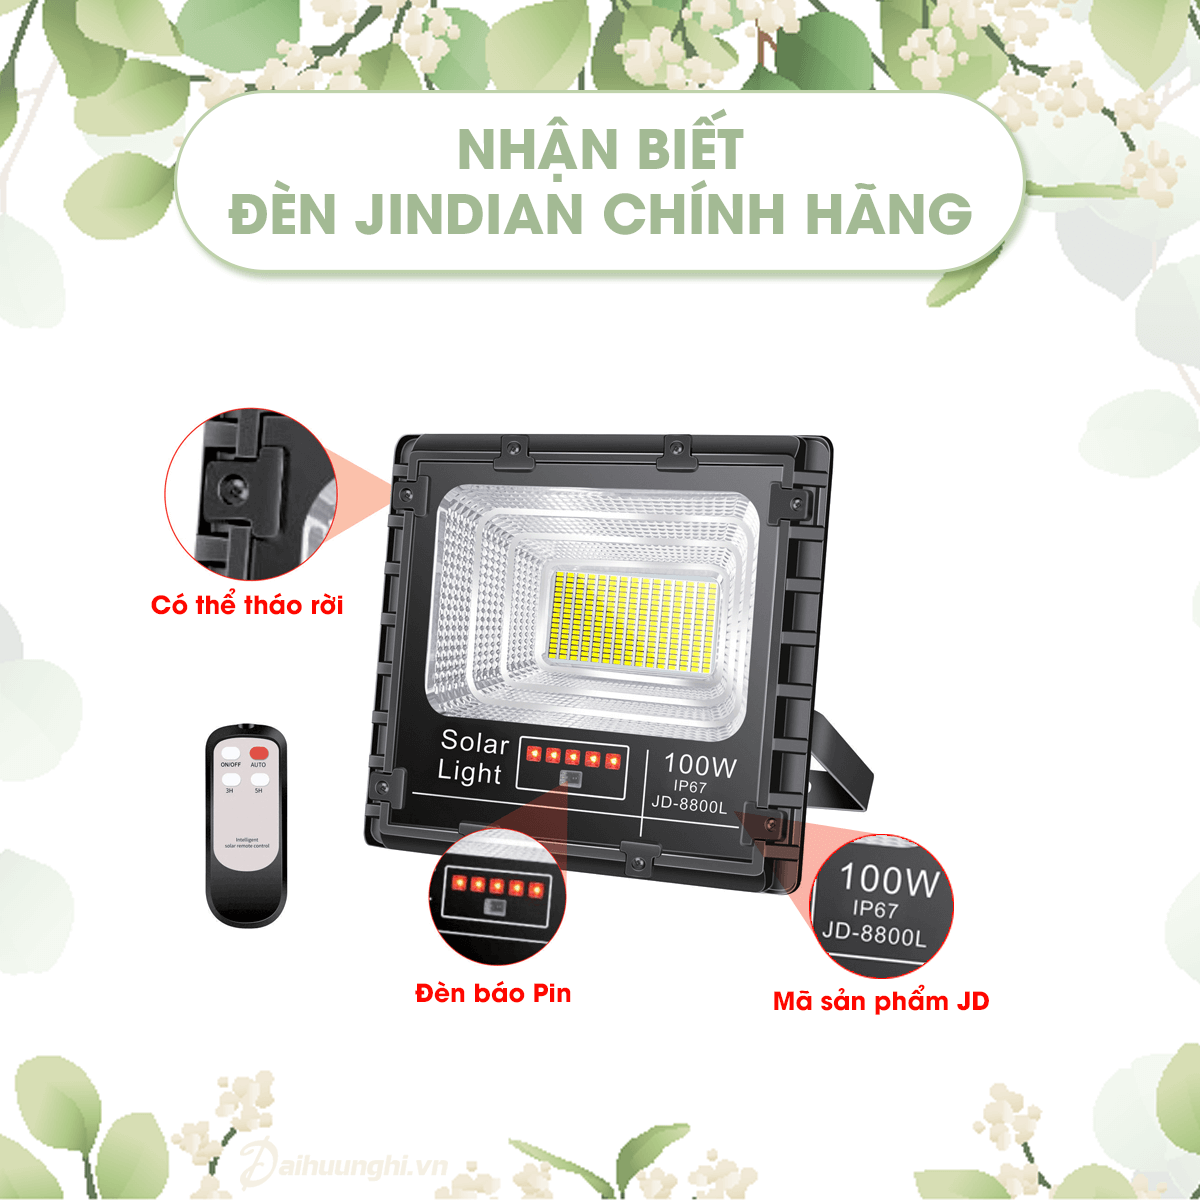 nhan_biet_den_jindian_chinh_hang